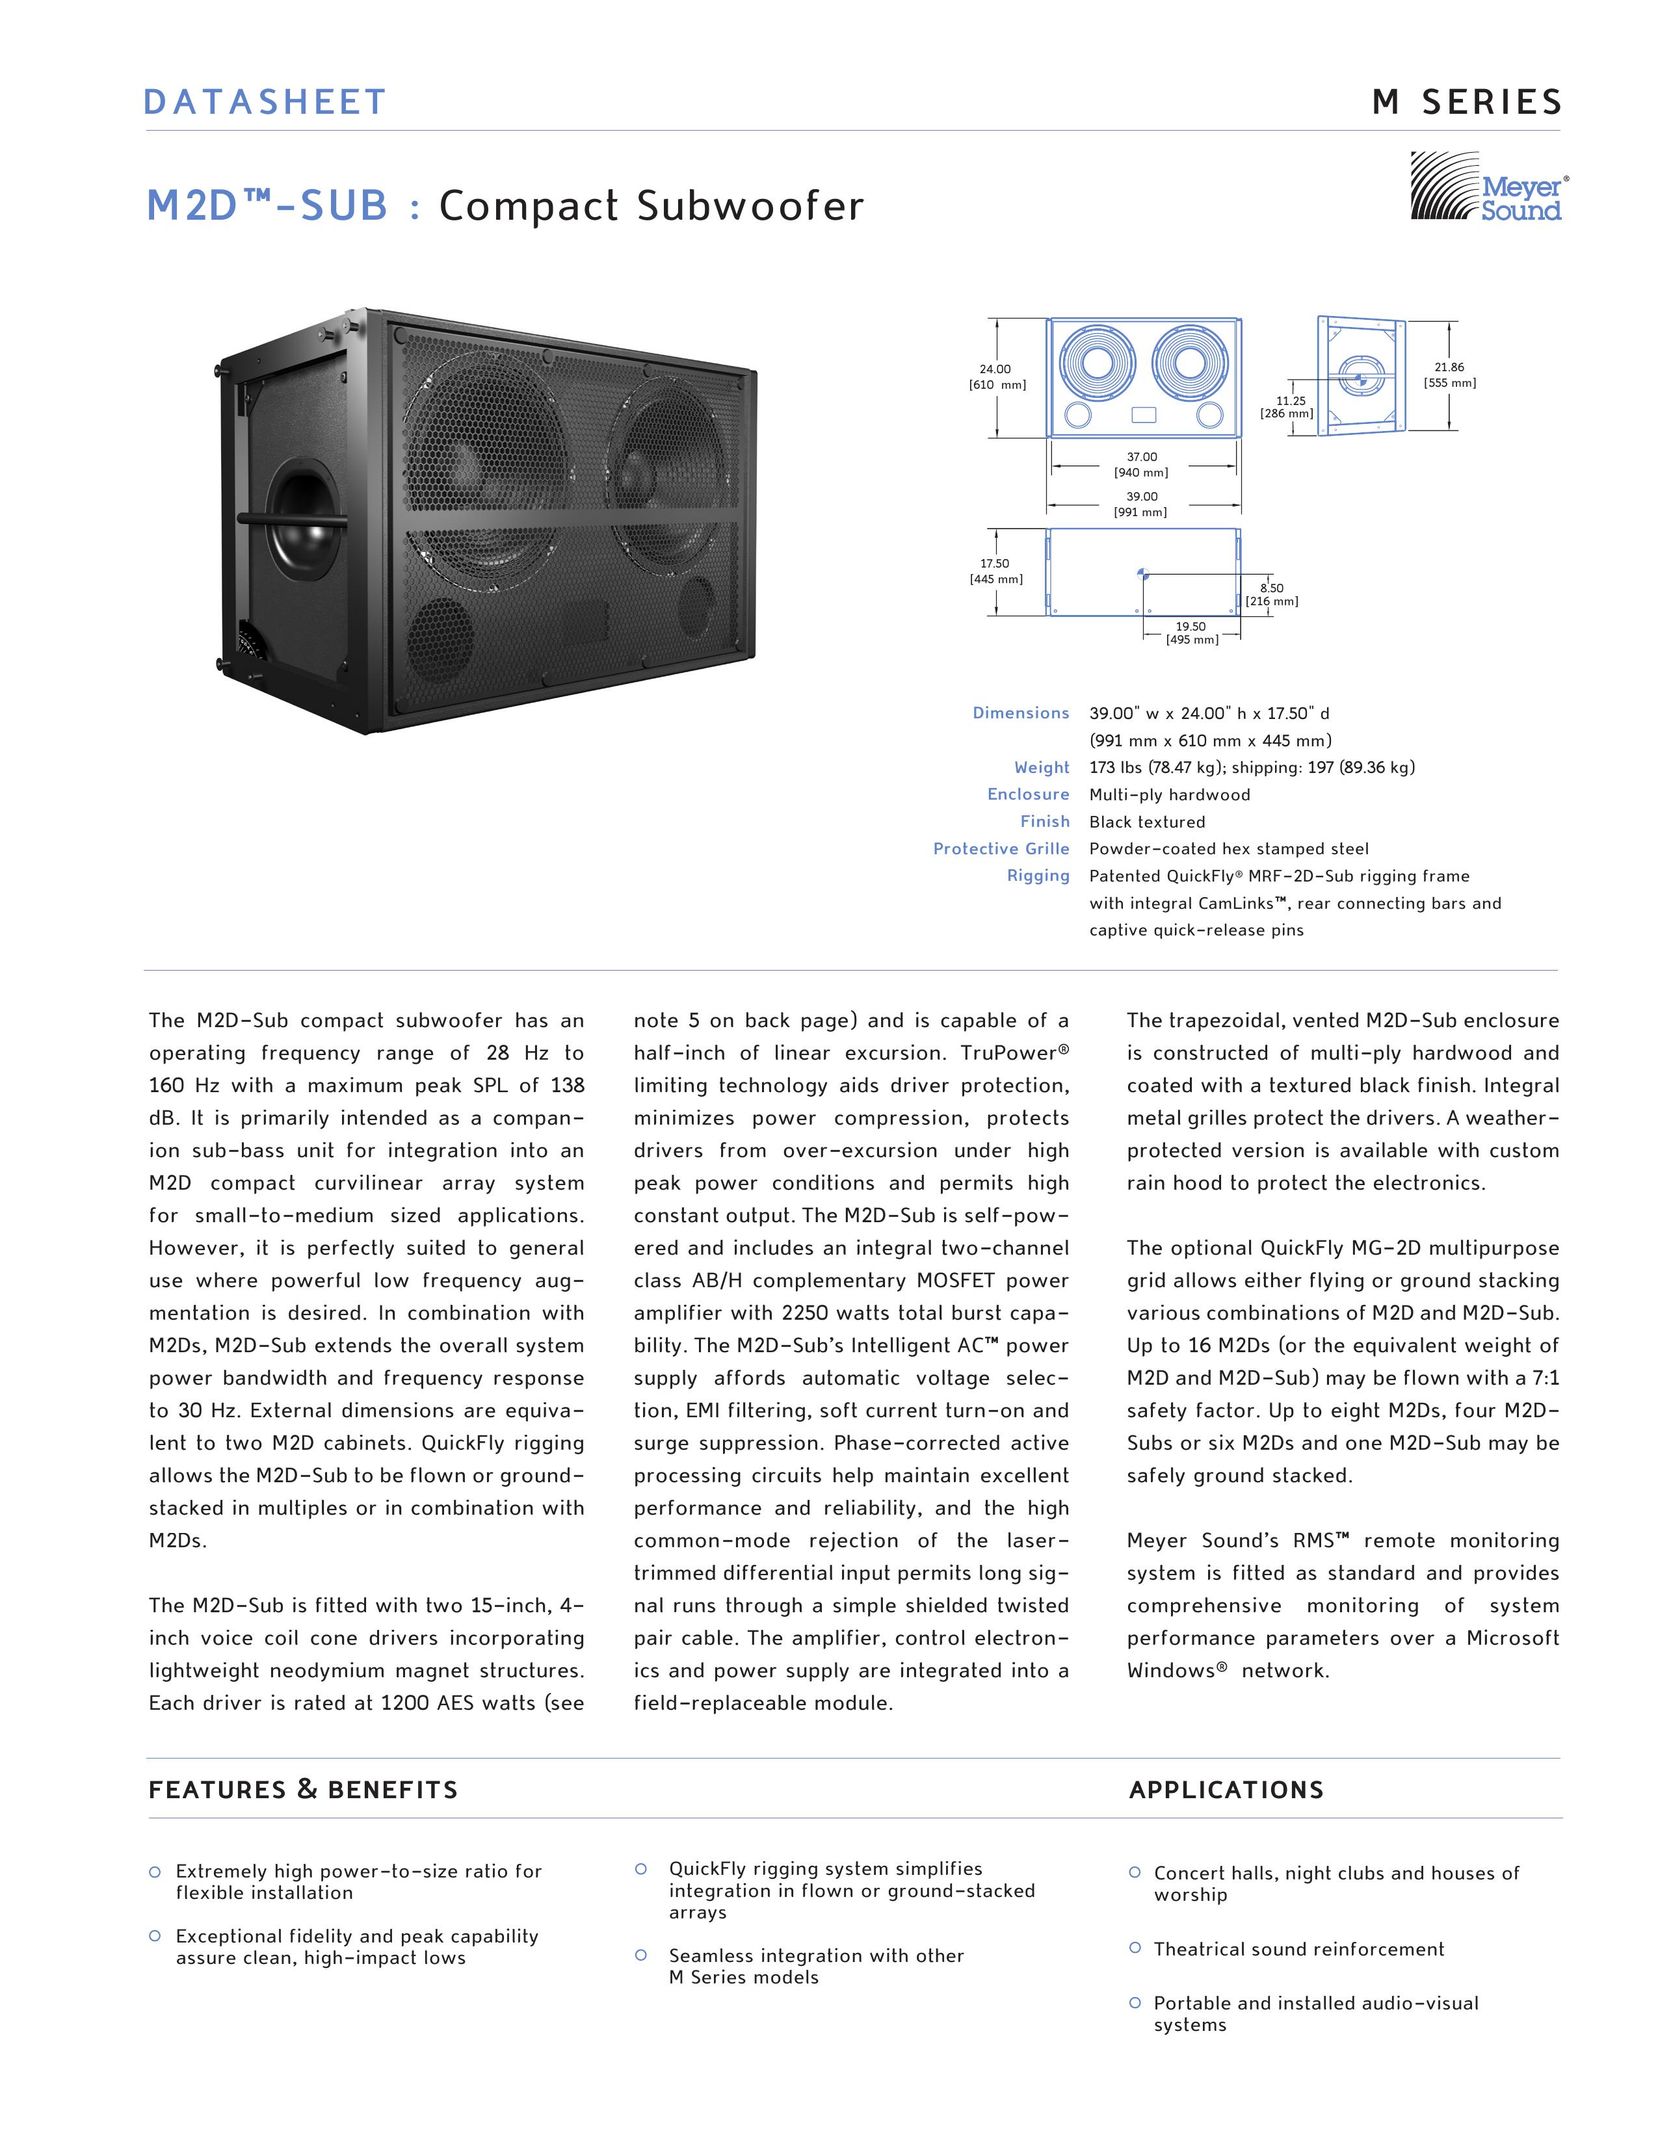 Meyer Sound M2D-SUB Speaker User Manual